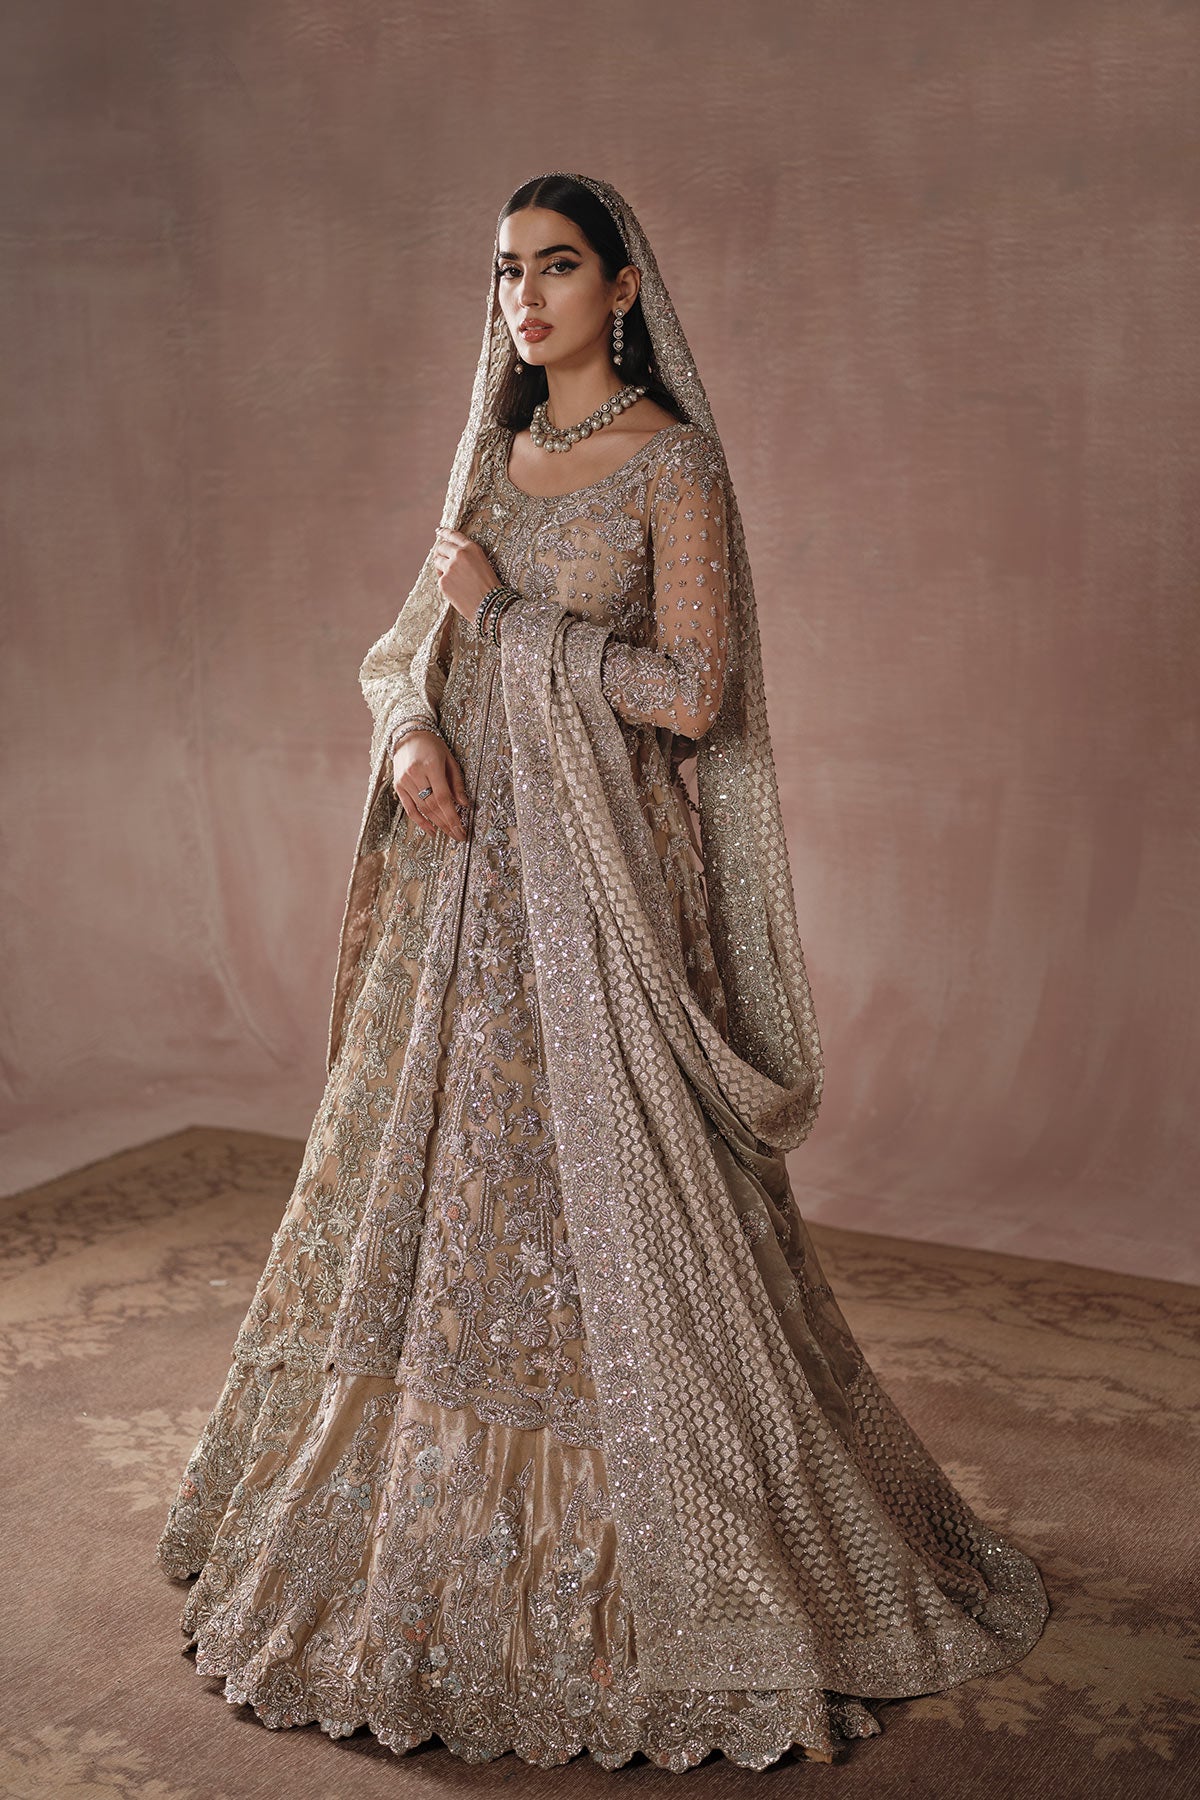 Priyanka Chopra Wears Falguni Shane Peacock Skirt and Top for Wedding  Reception in Photos